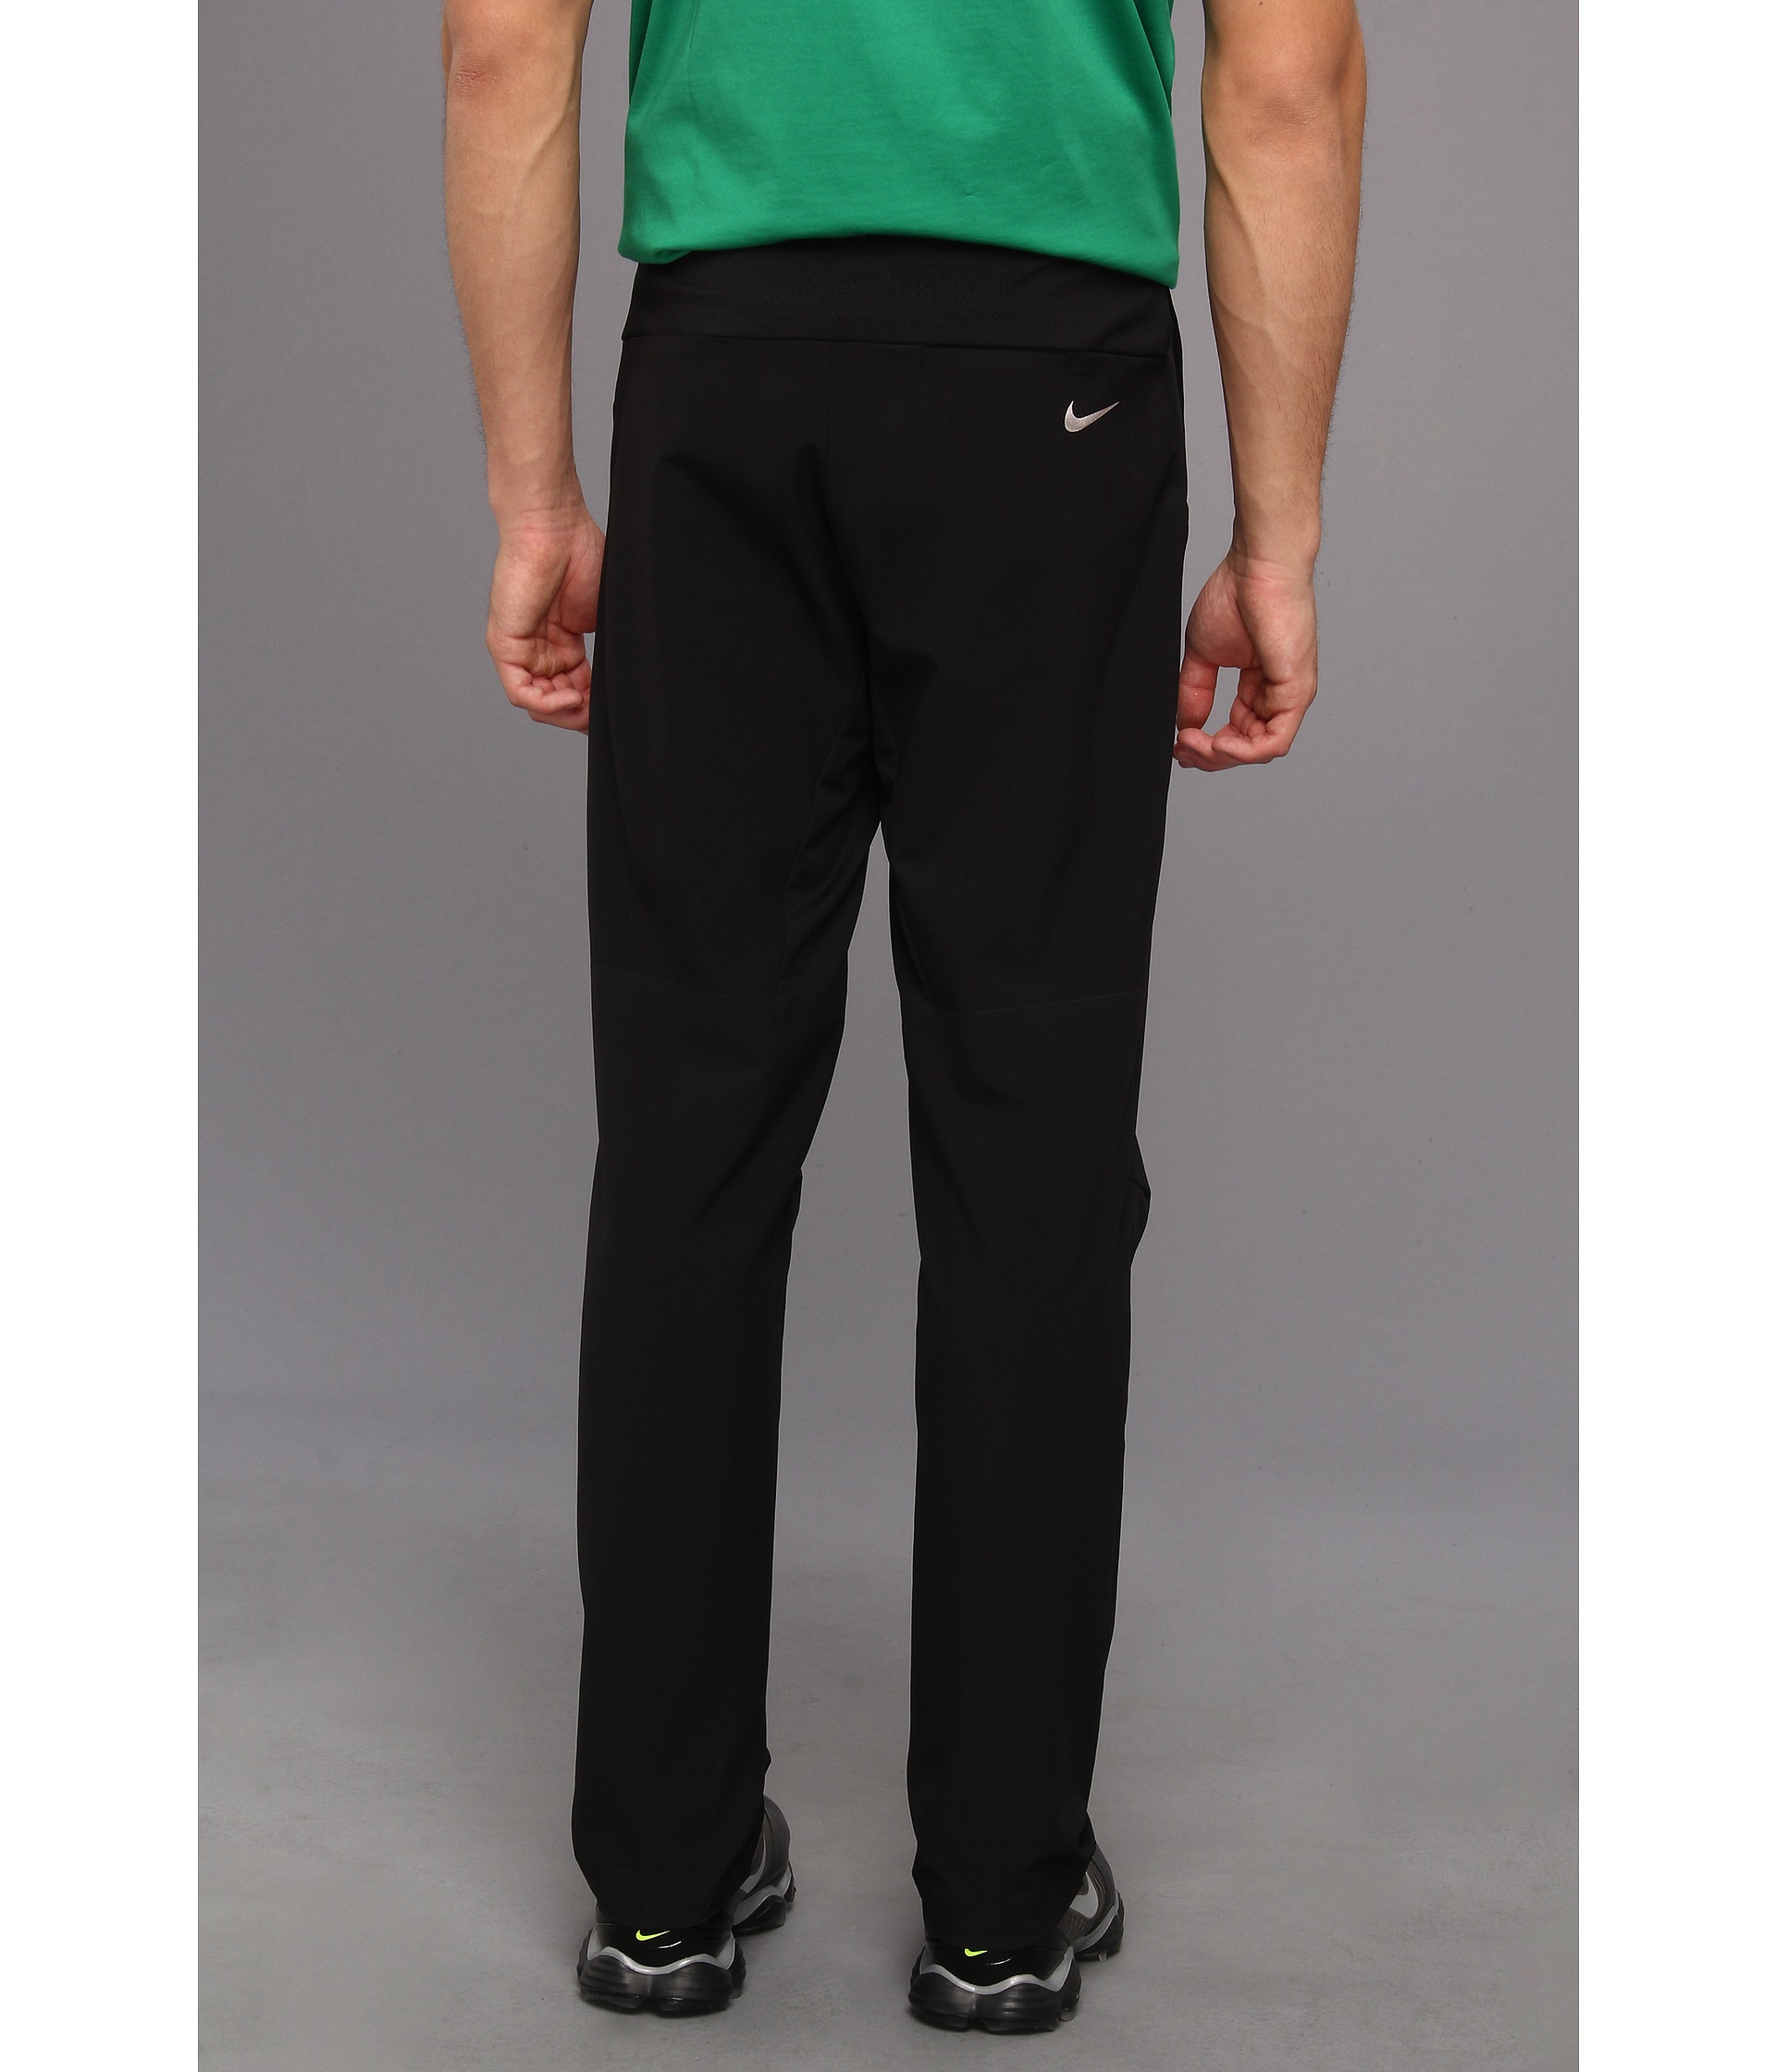 Nike Golf Tiger Woods Adaptive Fit Pant Black | Shipped Free at Zappos